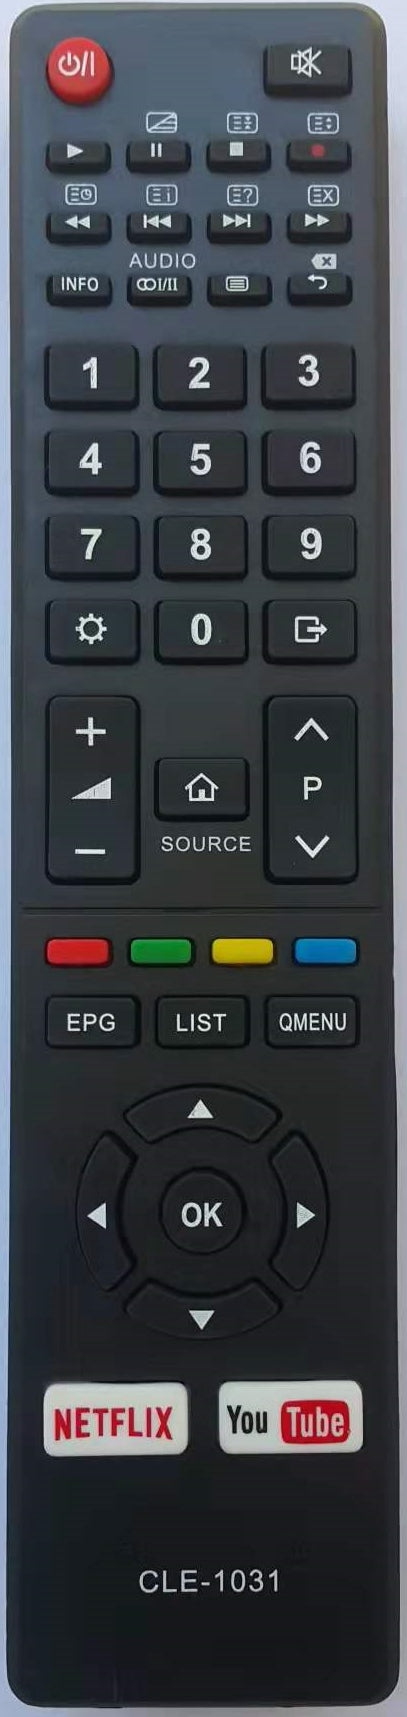 Hitachi 42FHDSM20 LED HD TV Replacement Remote Control